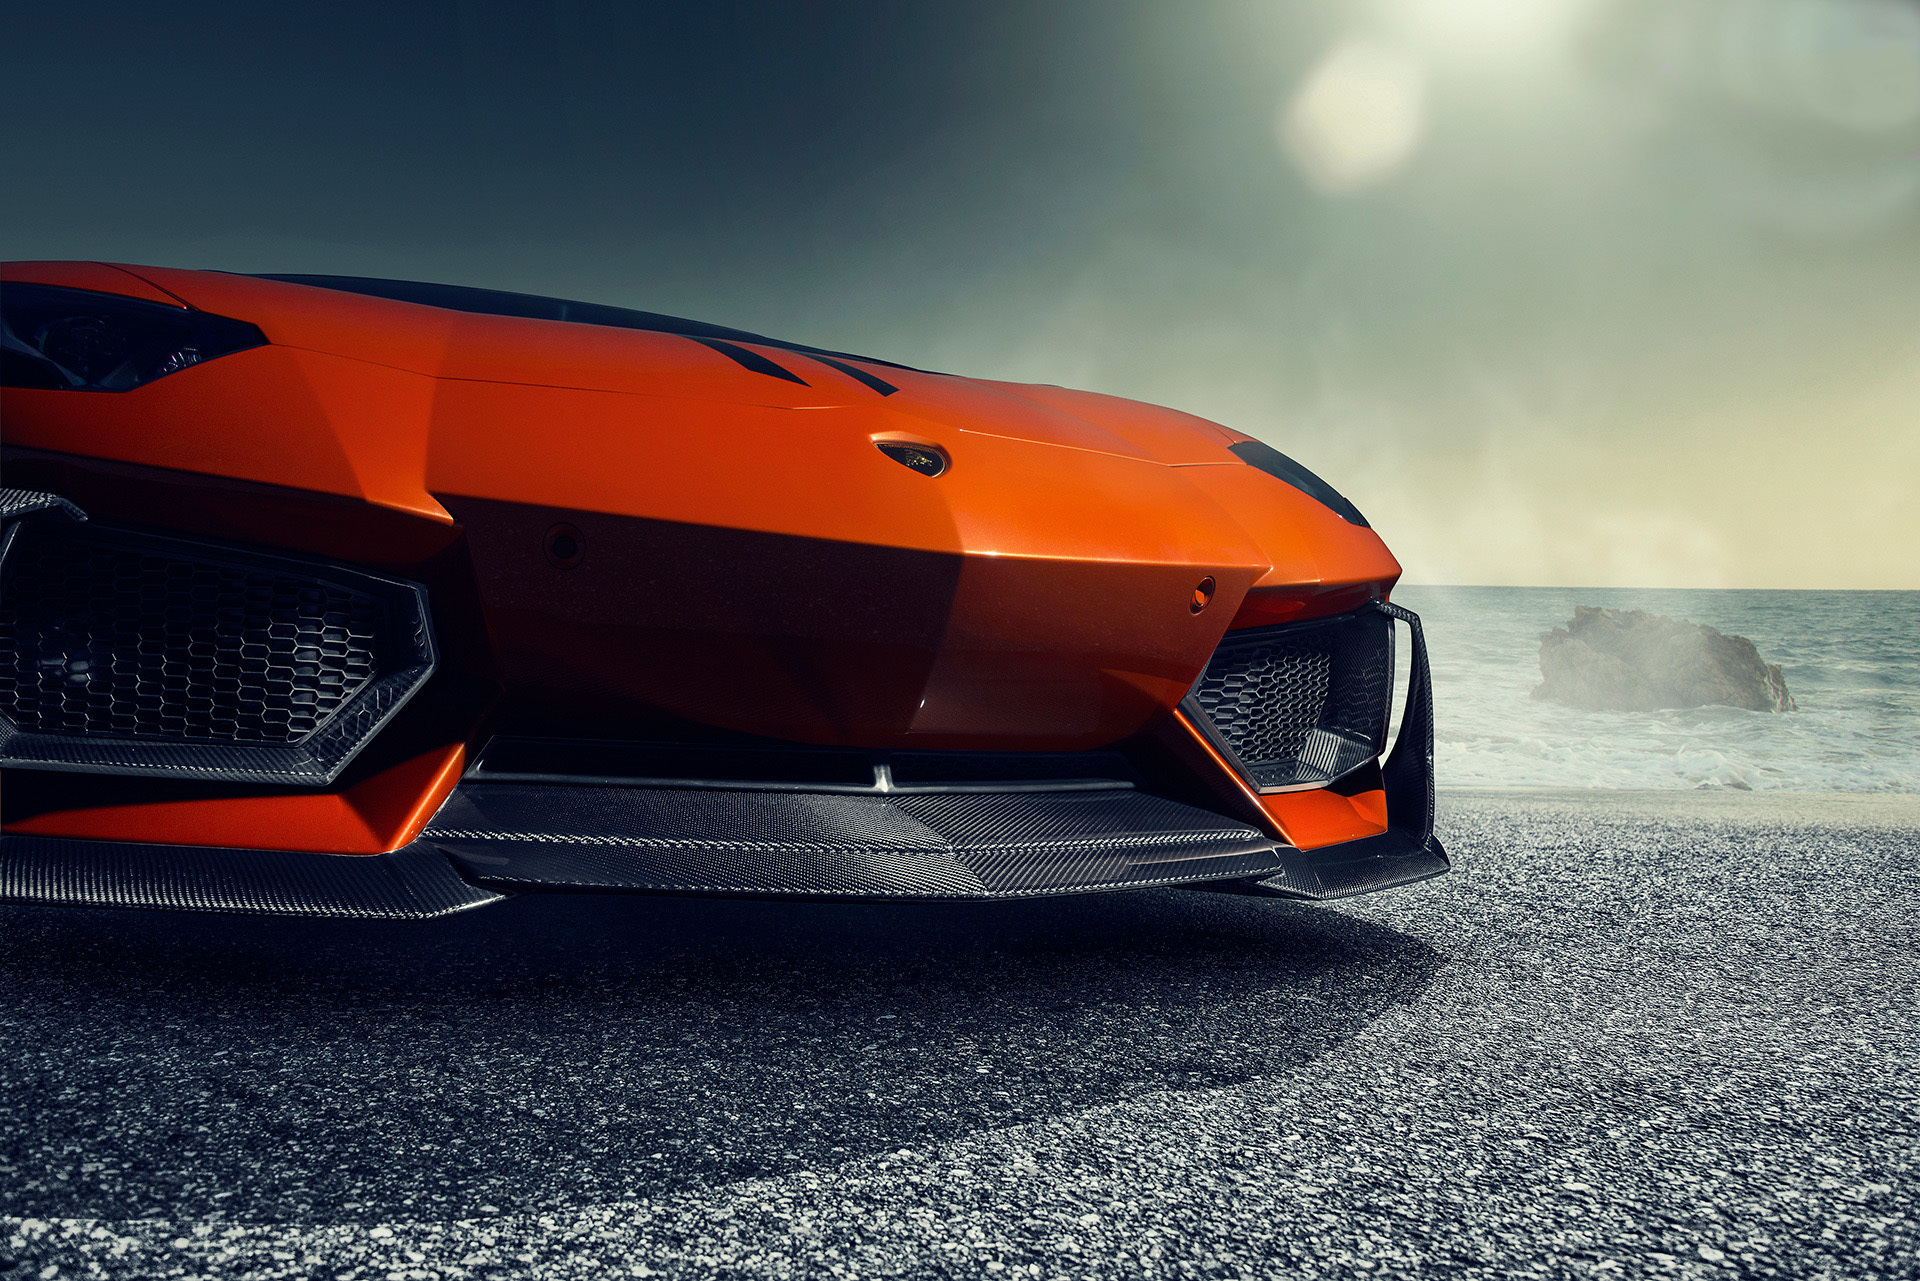 Vorsteiner Nero body kit for Lamborghini Aventador new style